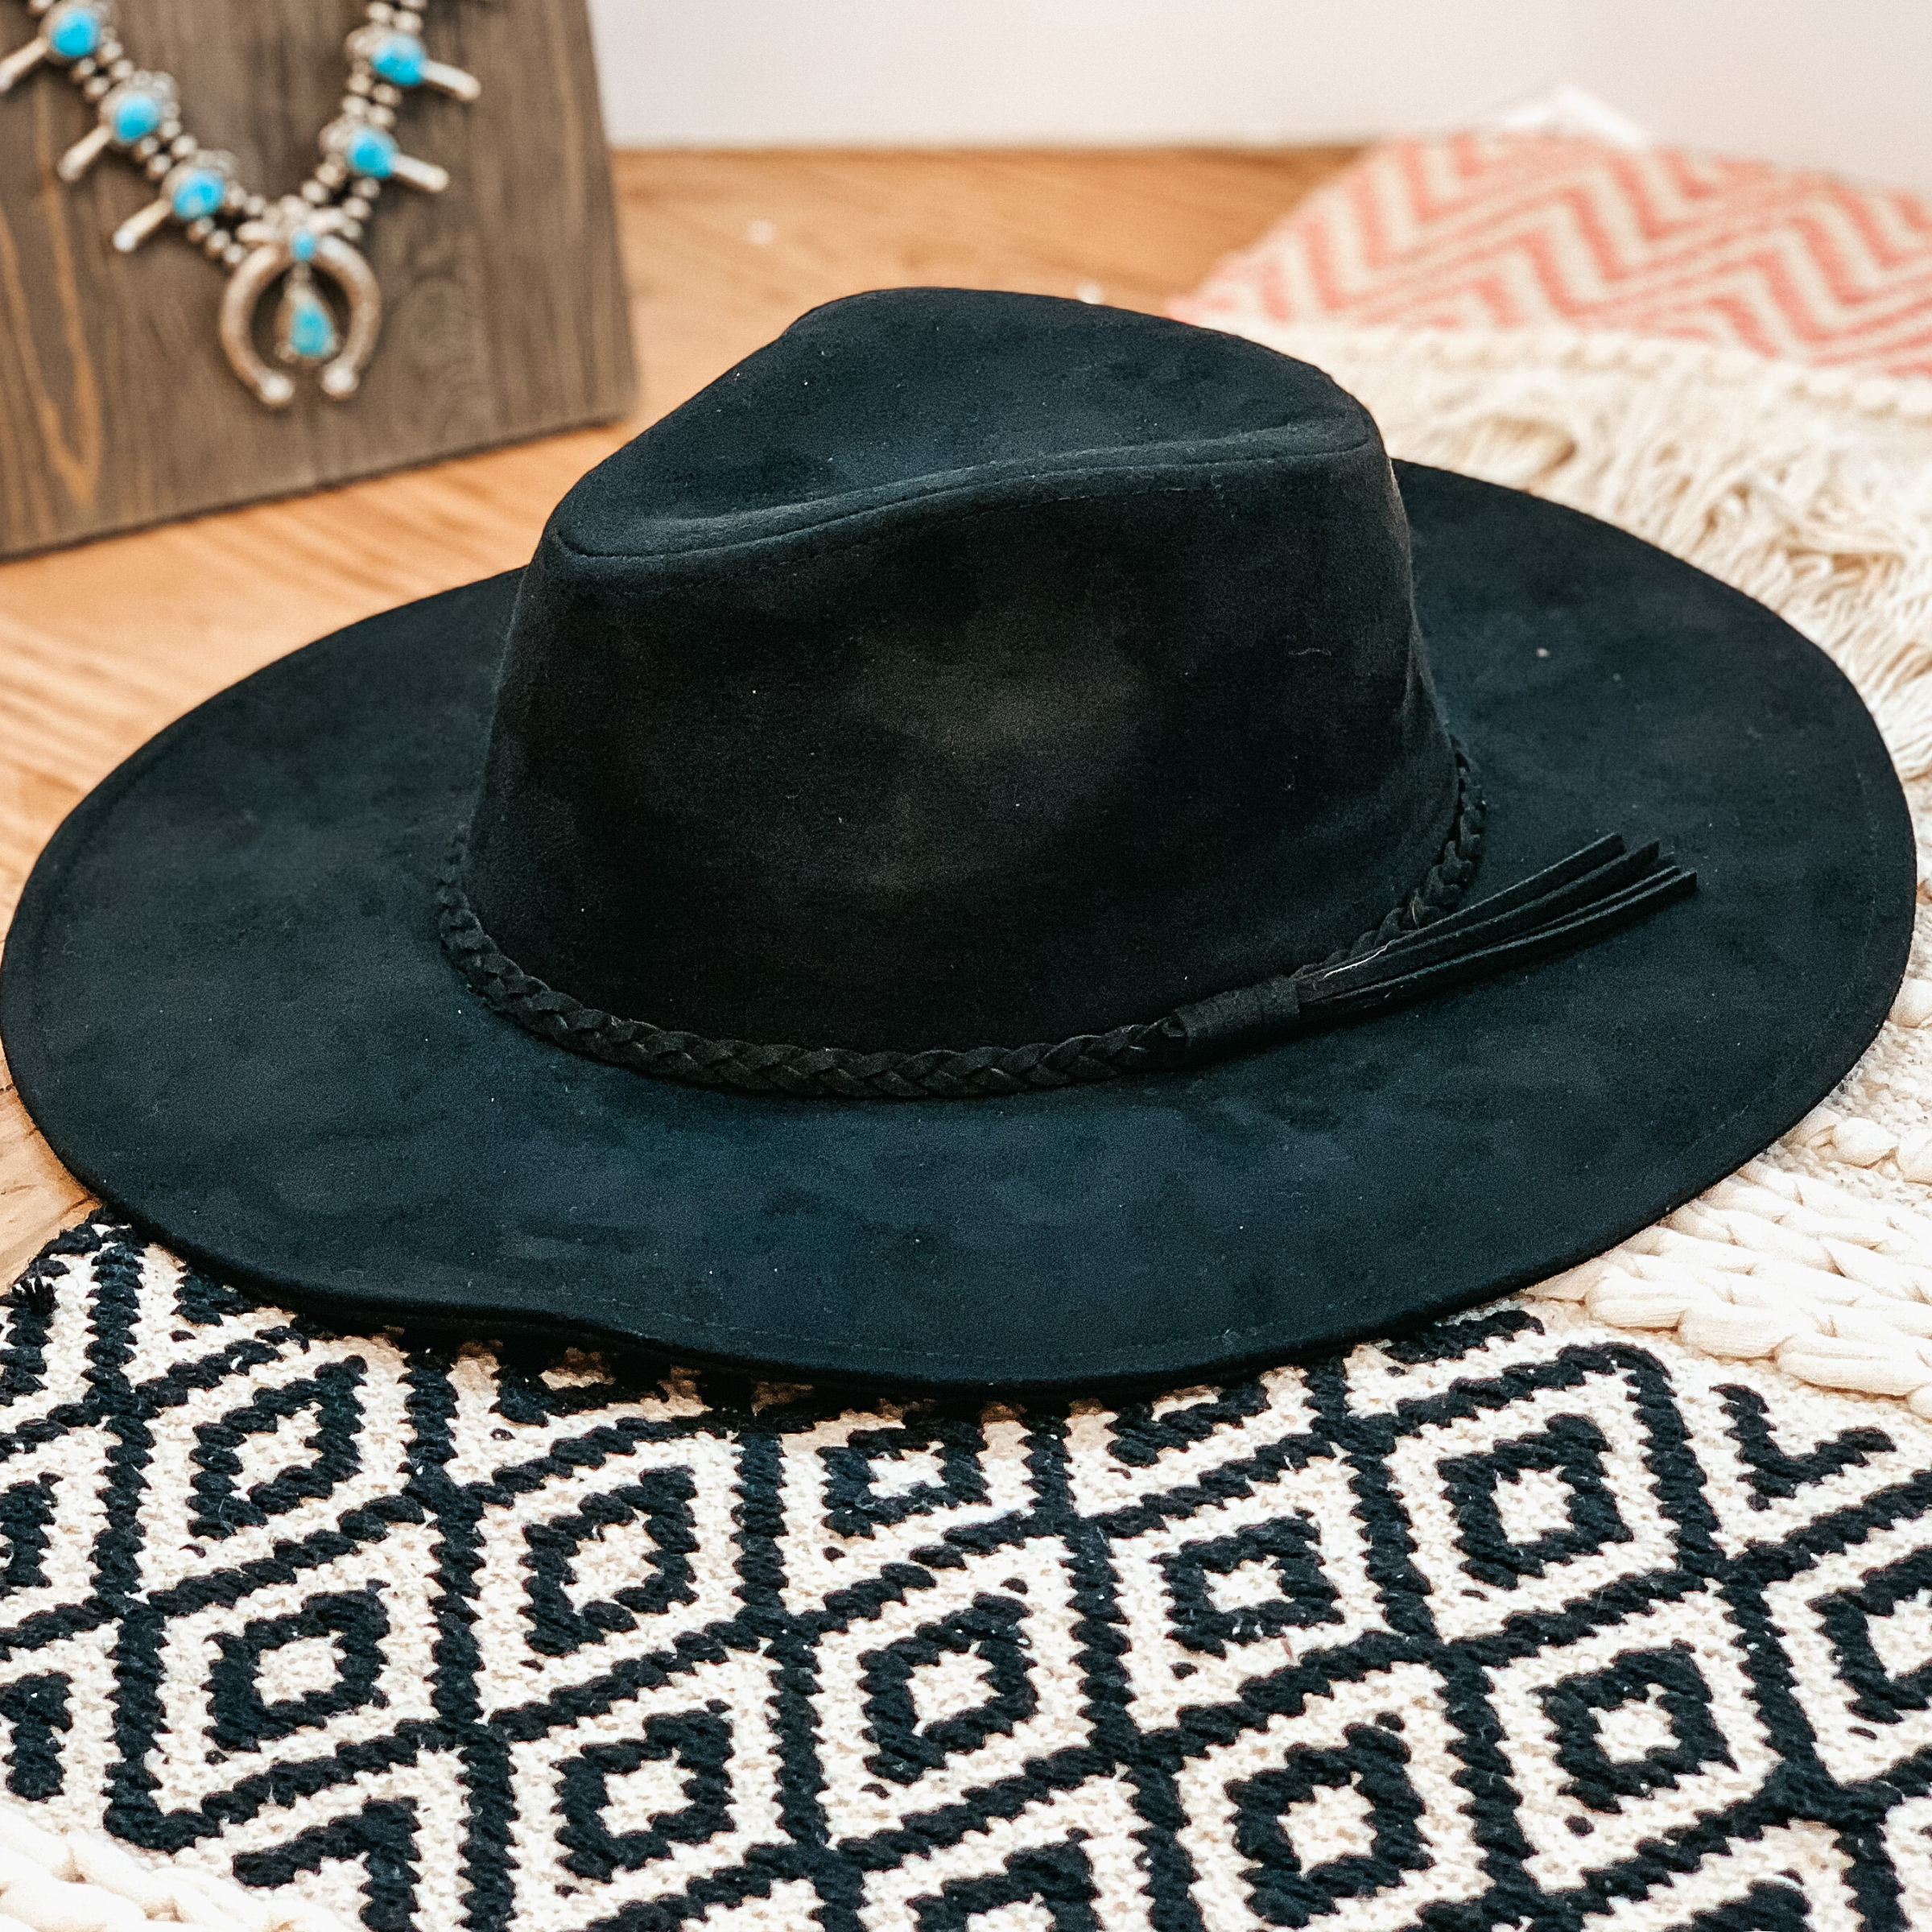 Oklahoma Hills Floppy Brim Faux Felt Hat in Black - Giddy Up Glamour Boutique